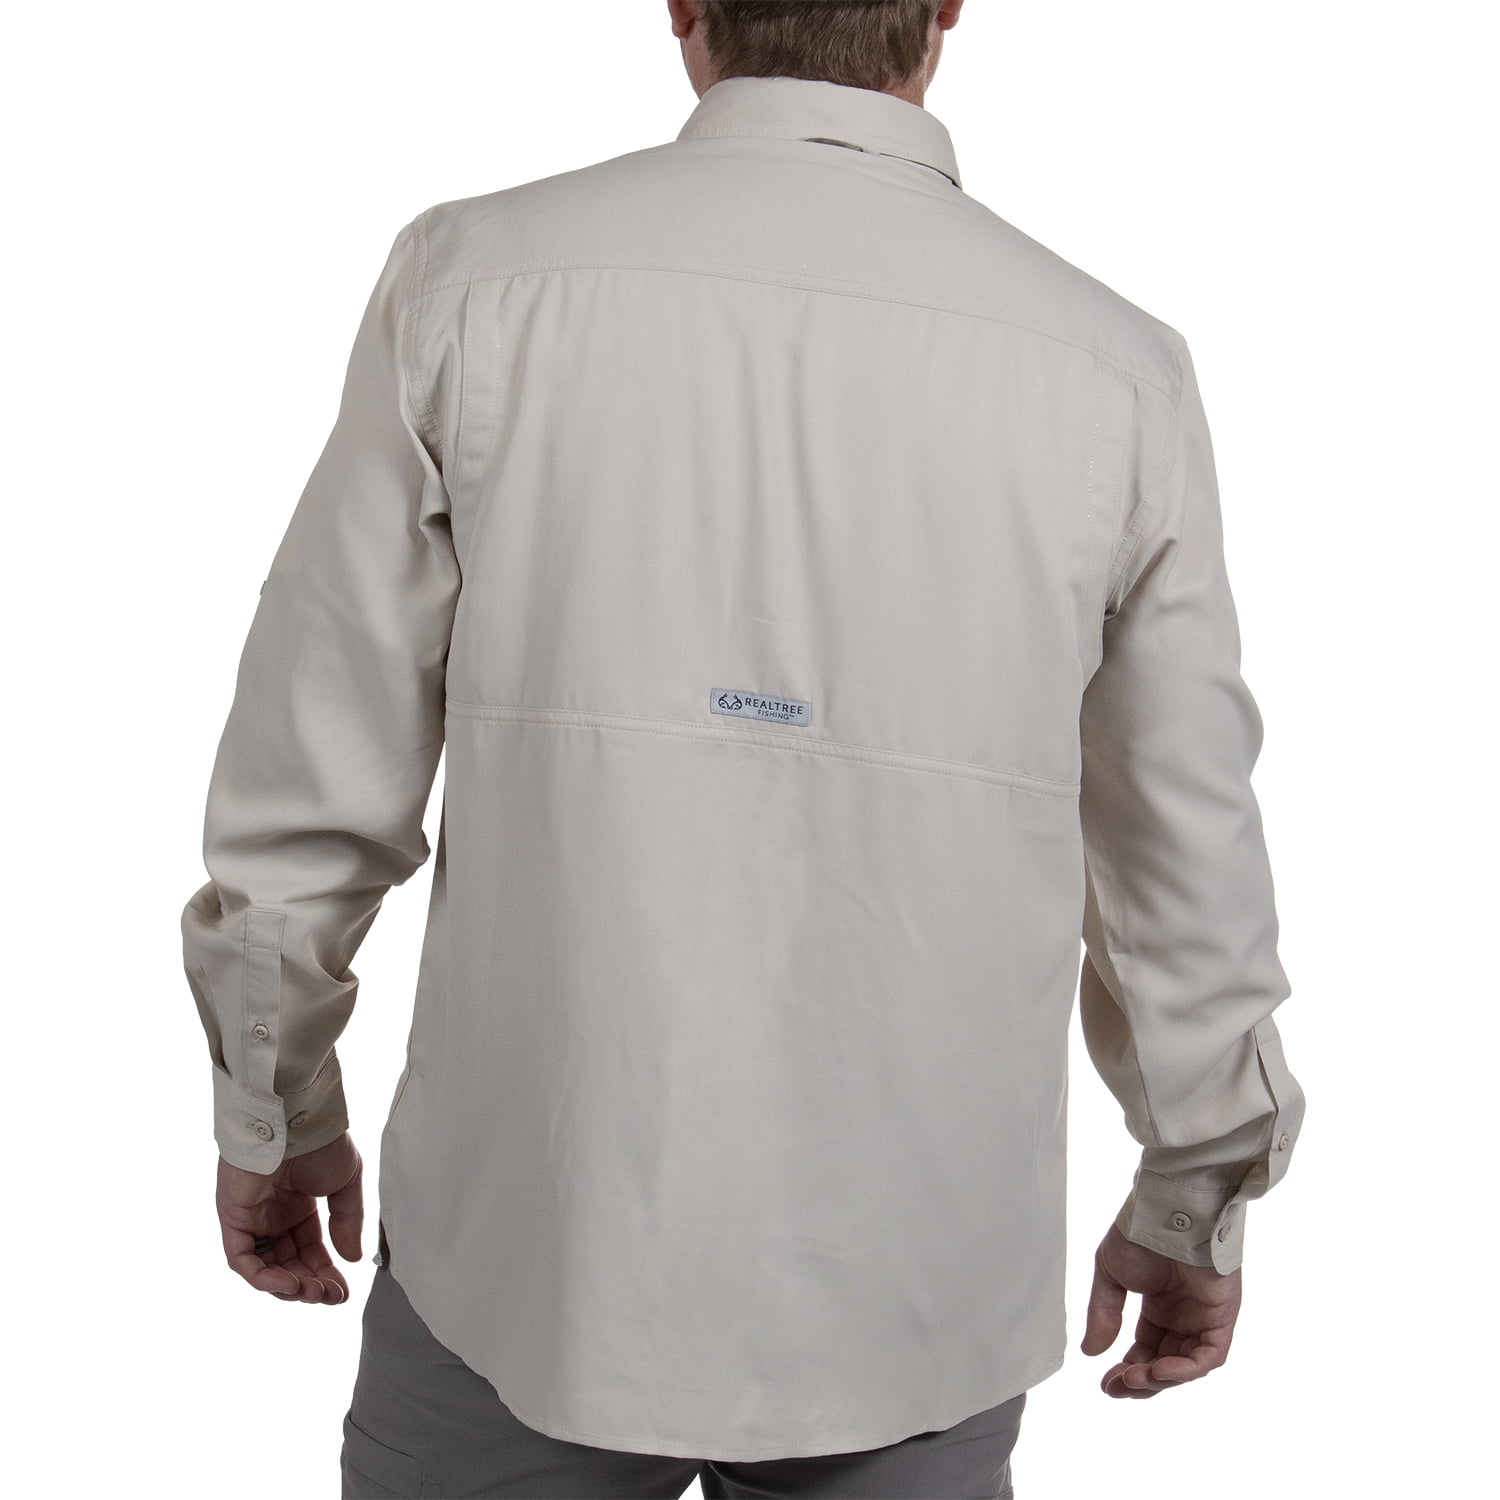 Realtree Long Sleeve Fishing Guide Shirt, Sahara, Size Extra Large